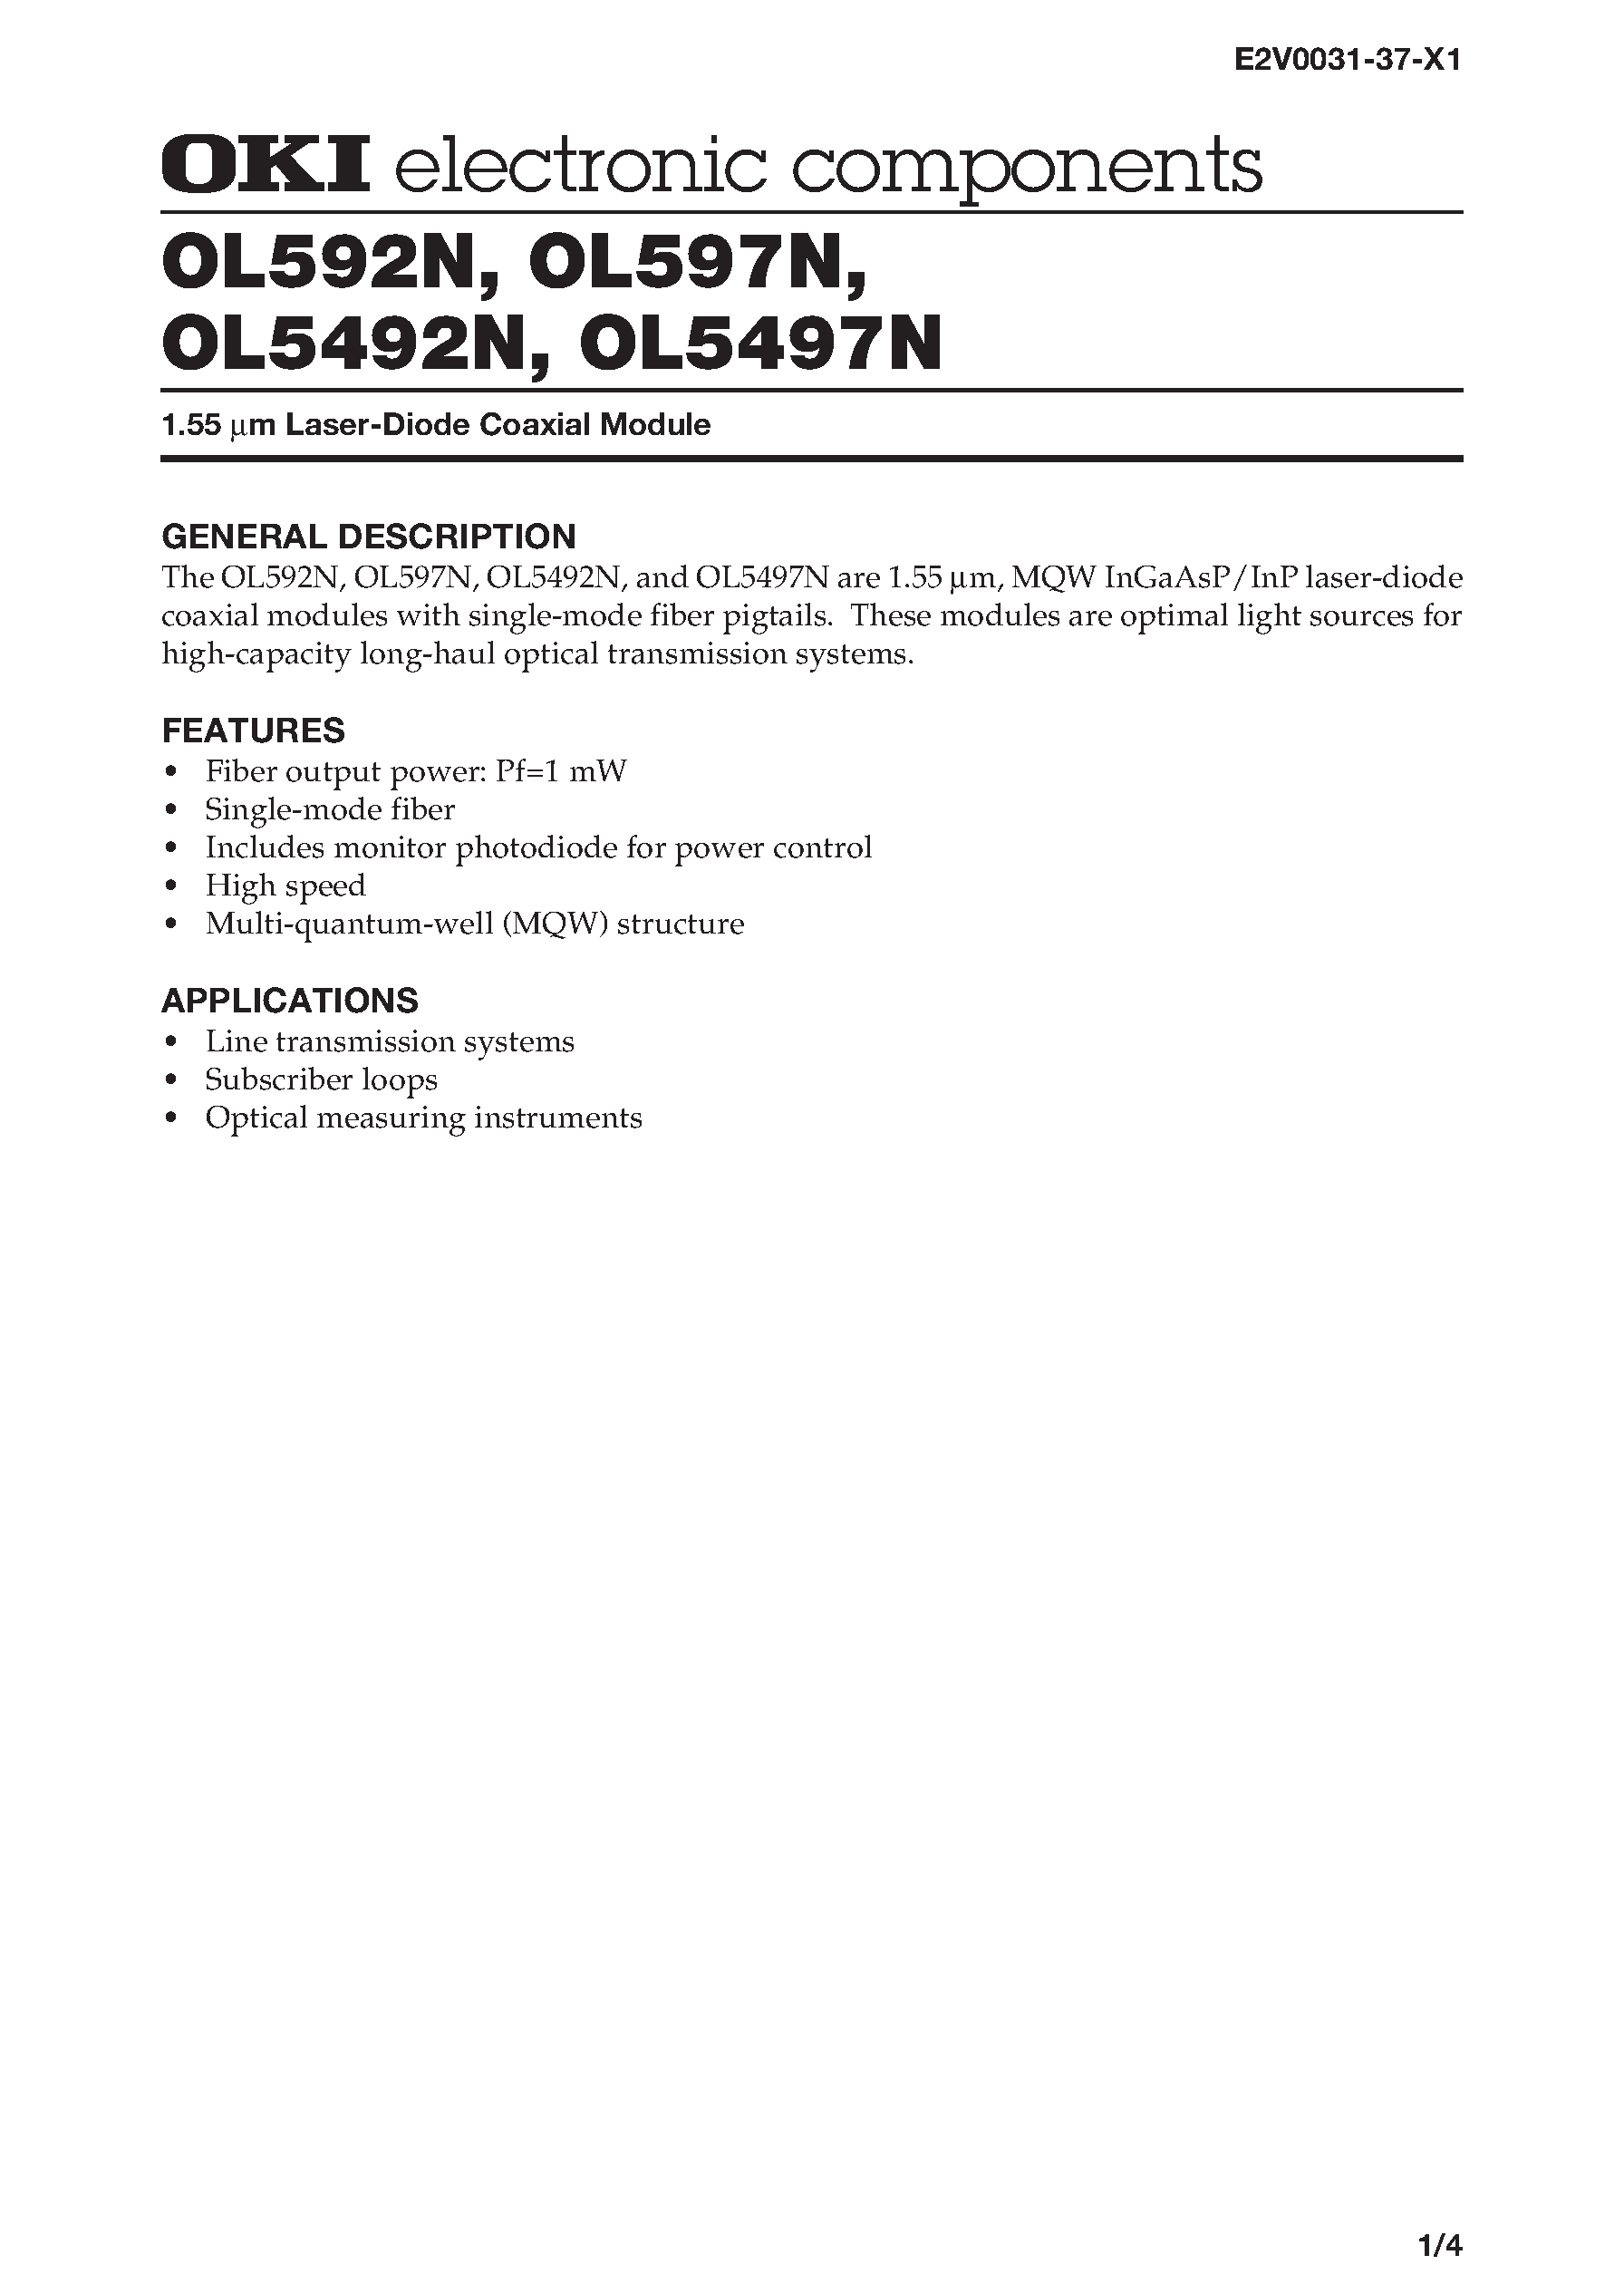 Datasheet OL5497N - 1.55 m Laser-Diode Coaxial Module page 1